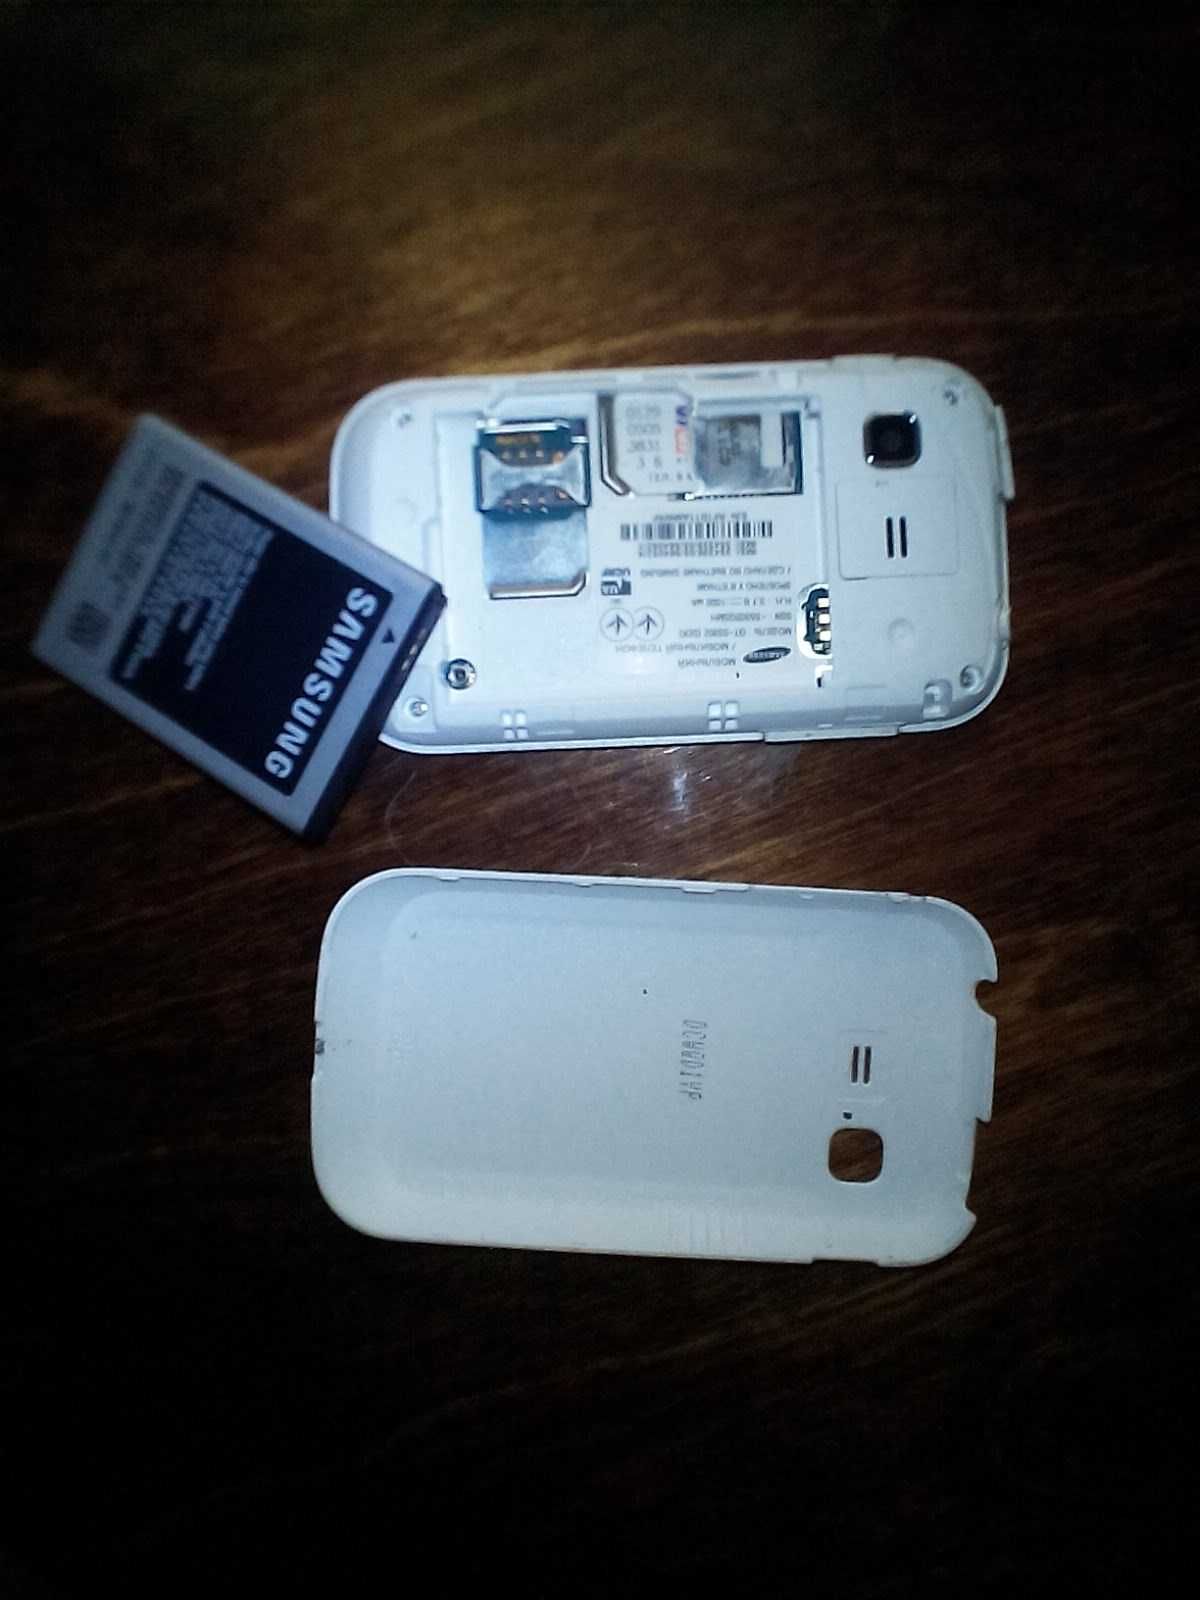 Samsung GALAXY Pocket